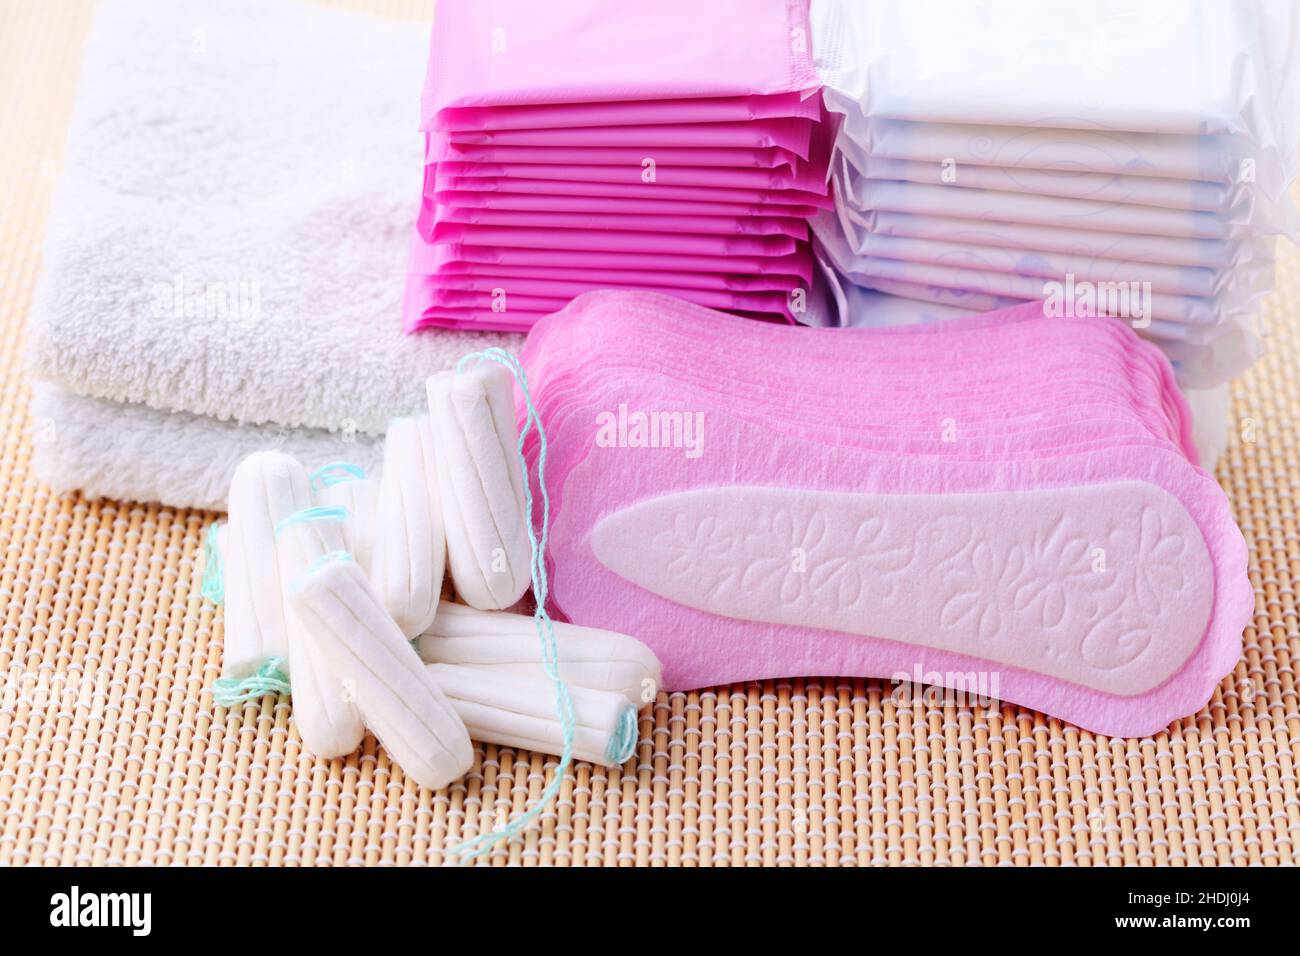 tampon, panty liner, tampons, panty liners Stock Photo - Alamy